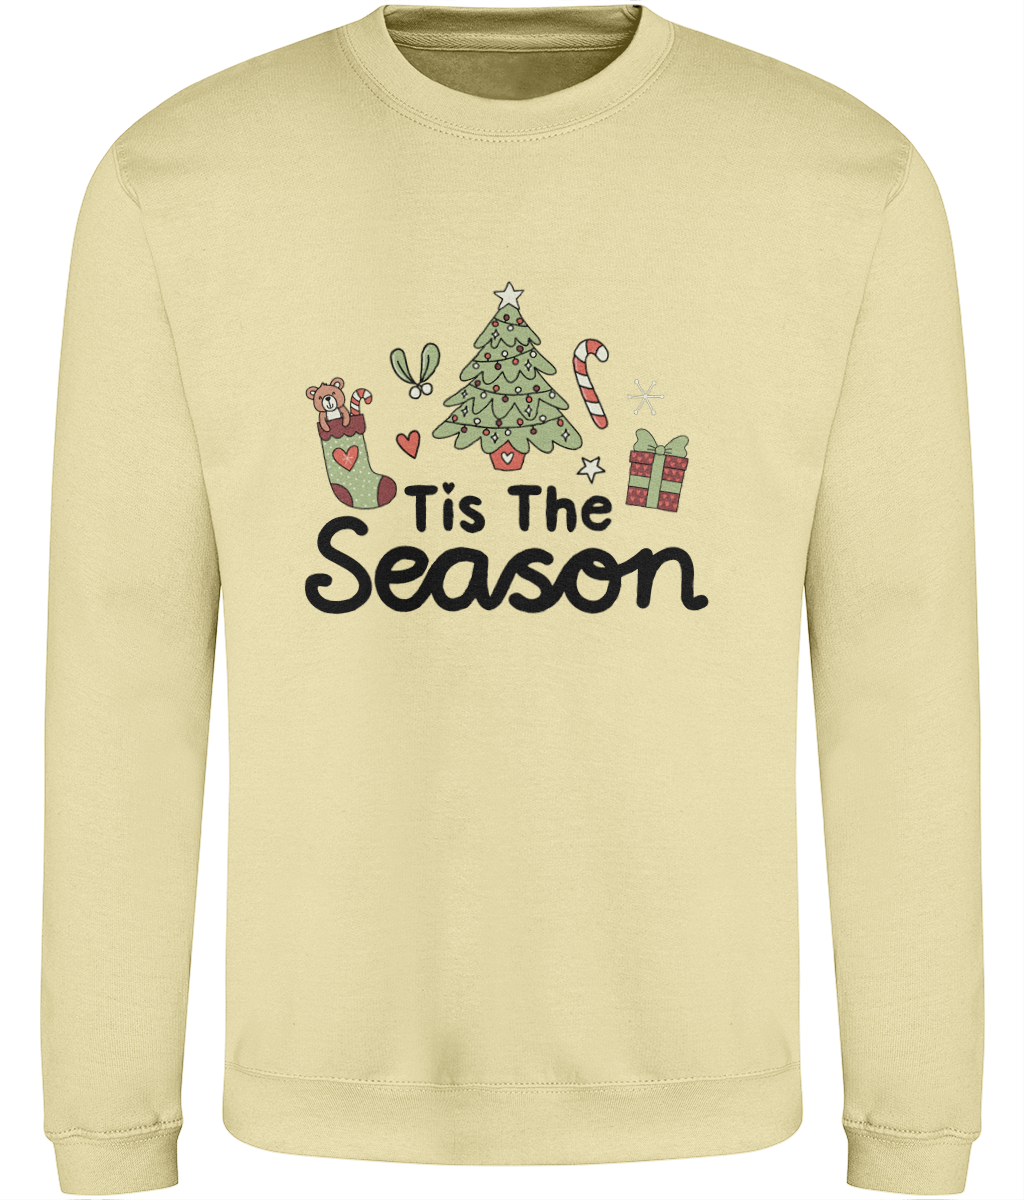 Tis The Season - Adult Sweatshirt - Light Multi Colour Available